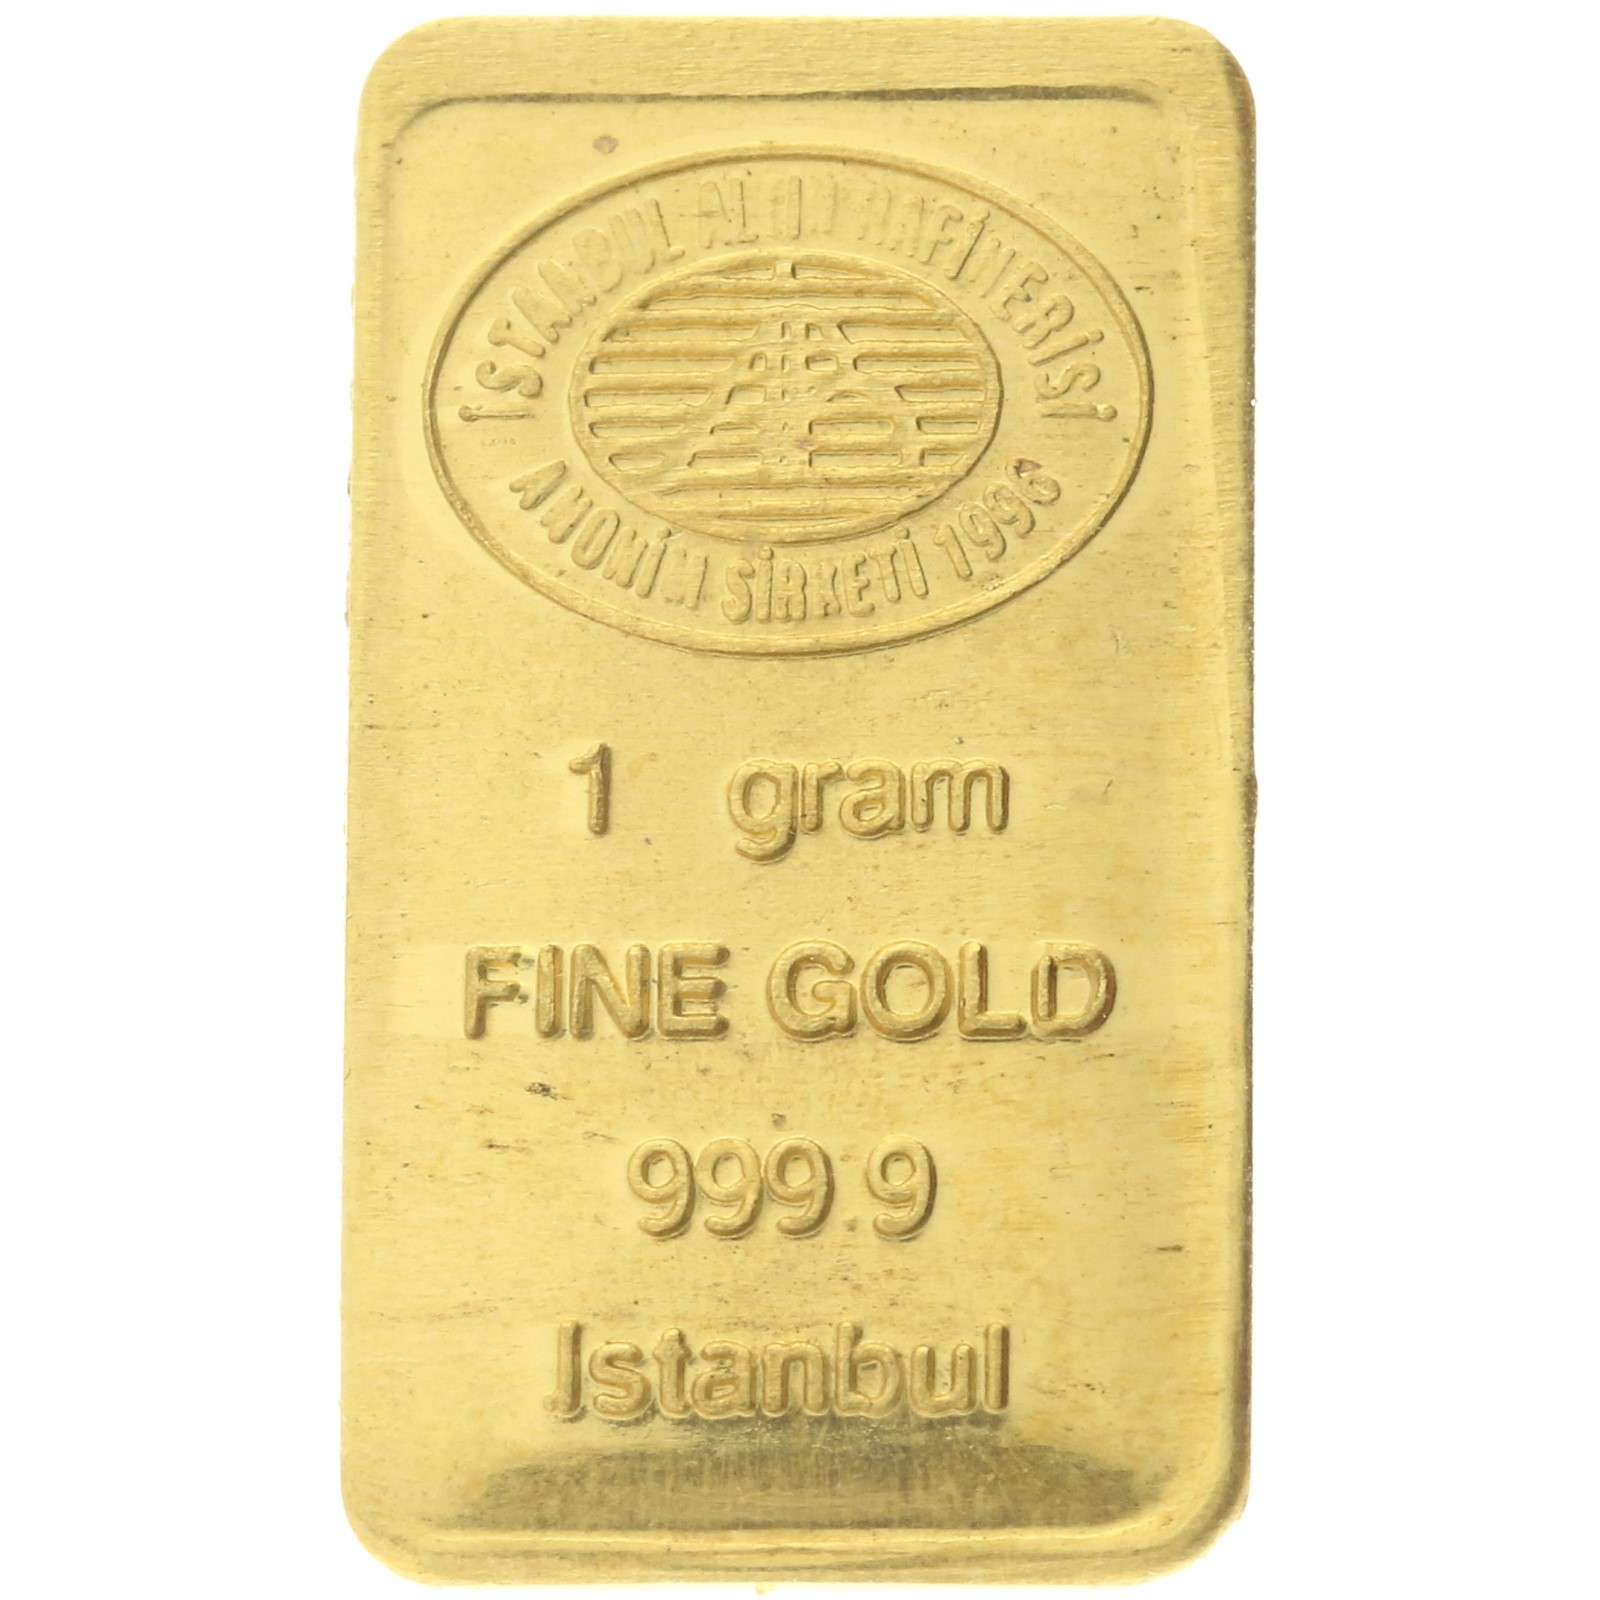 Istanbul Gold Refinery - 1 gram fine gold - bar